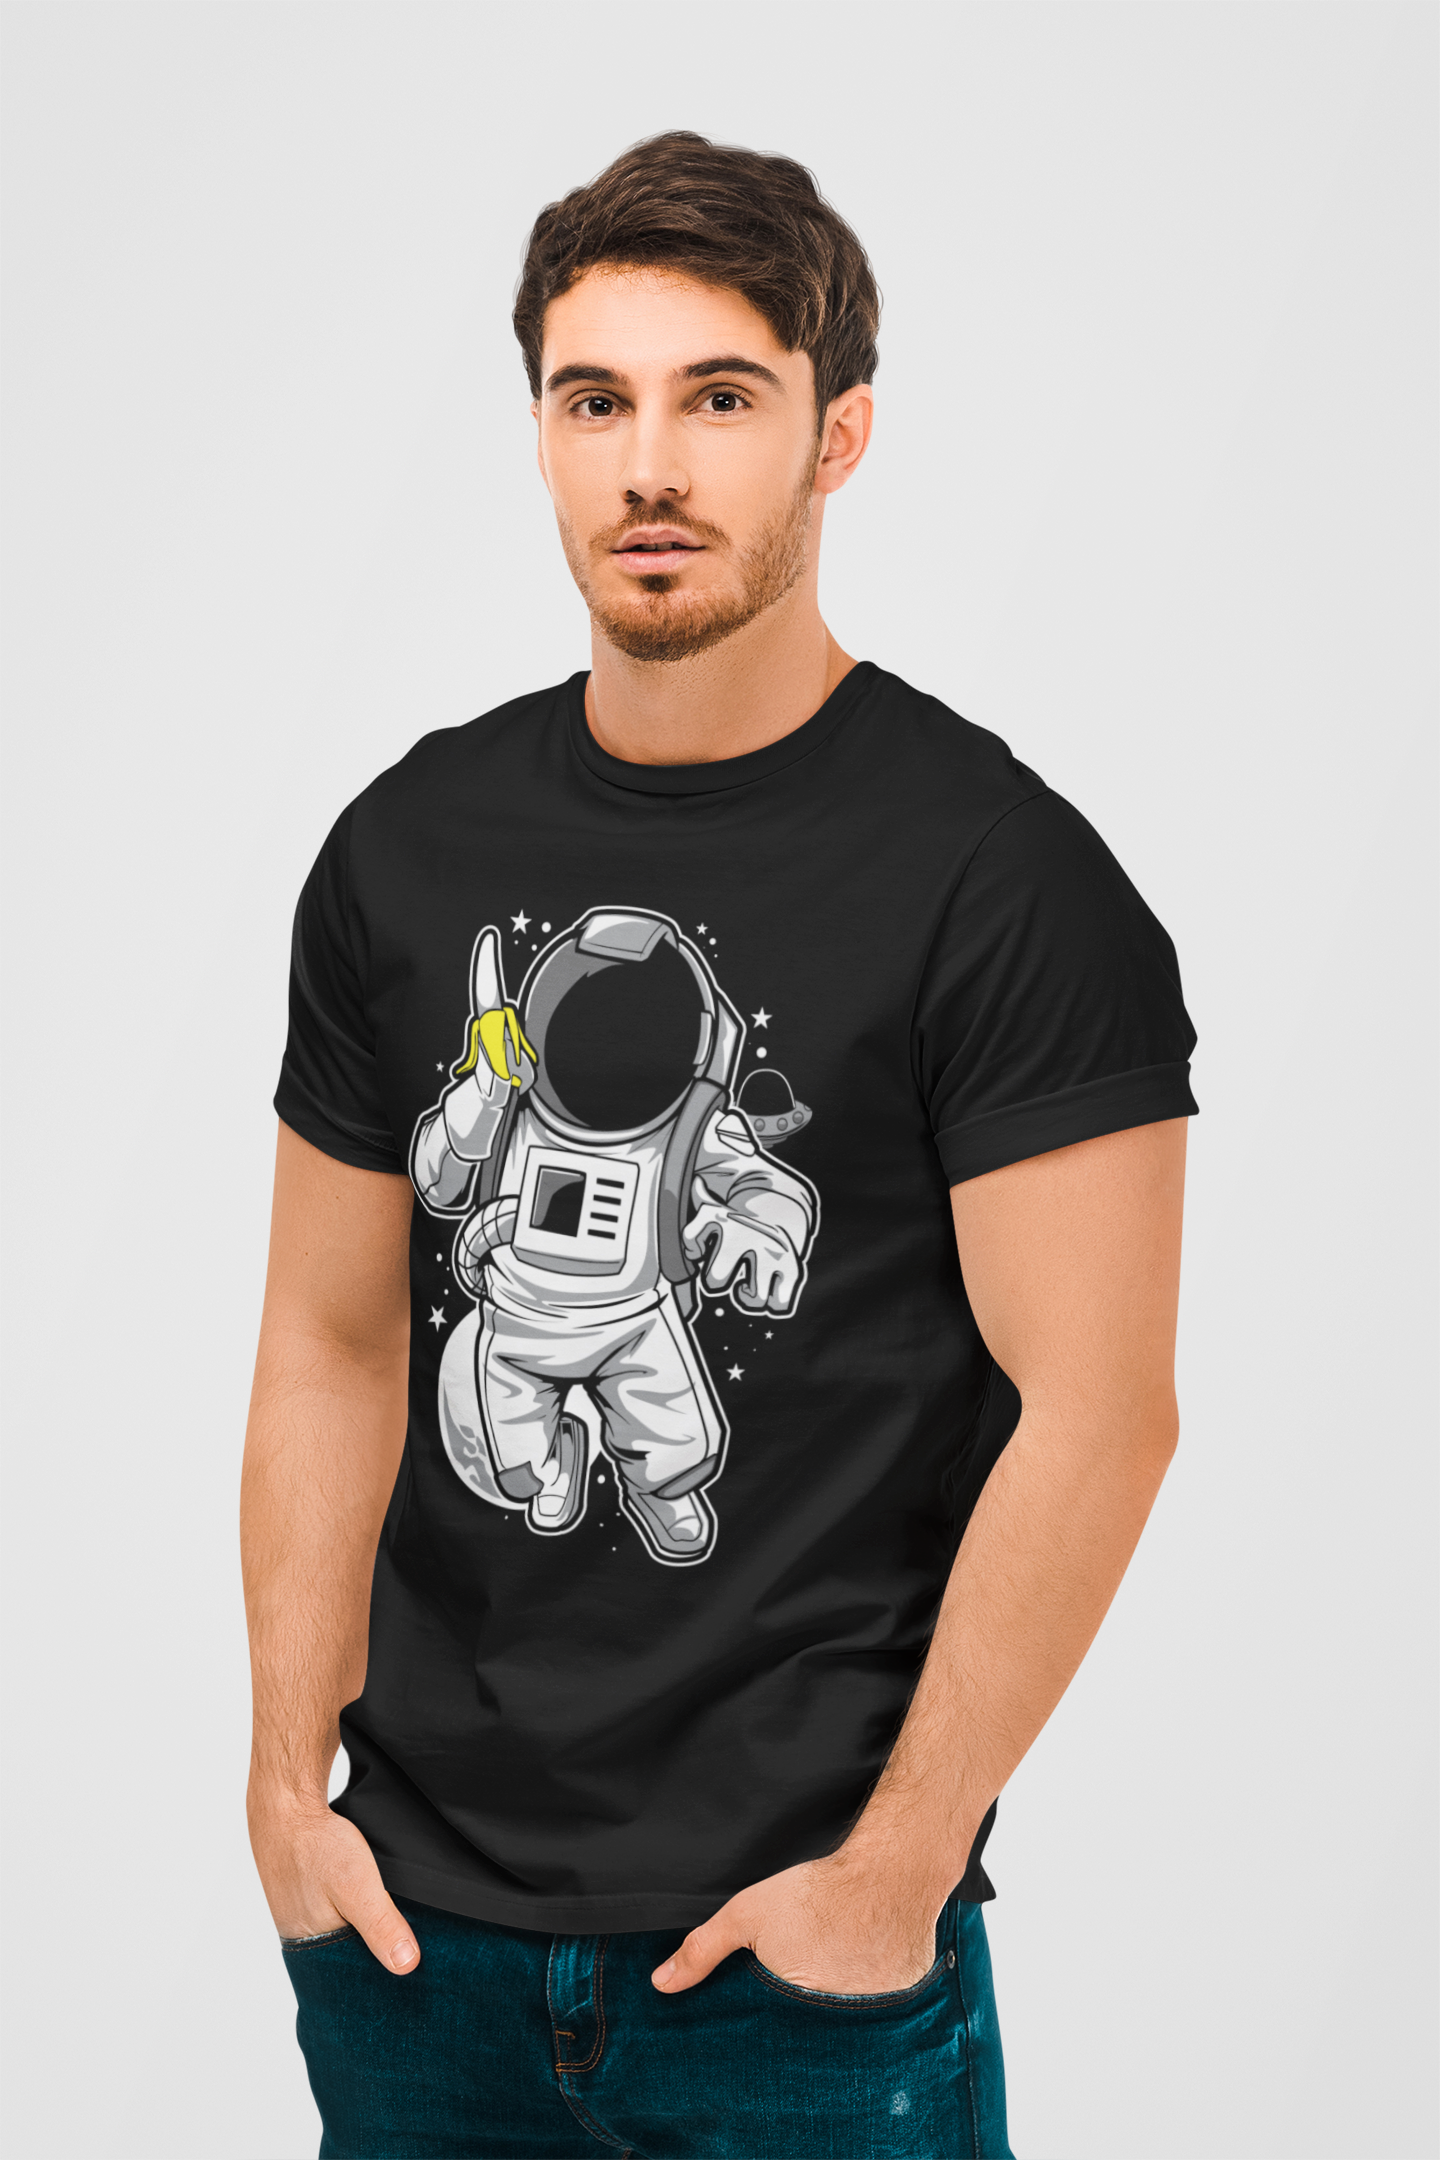 Astronaut Banana Black Round Neck T-Shirt for Men.